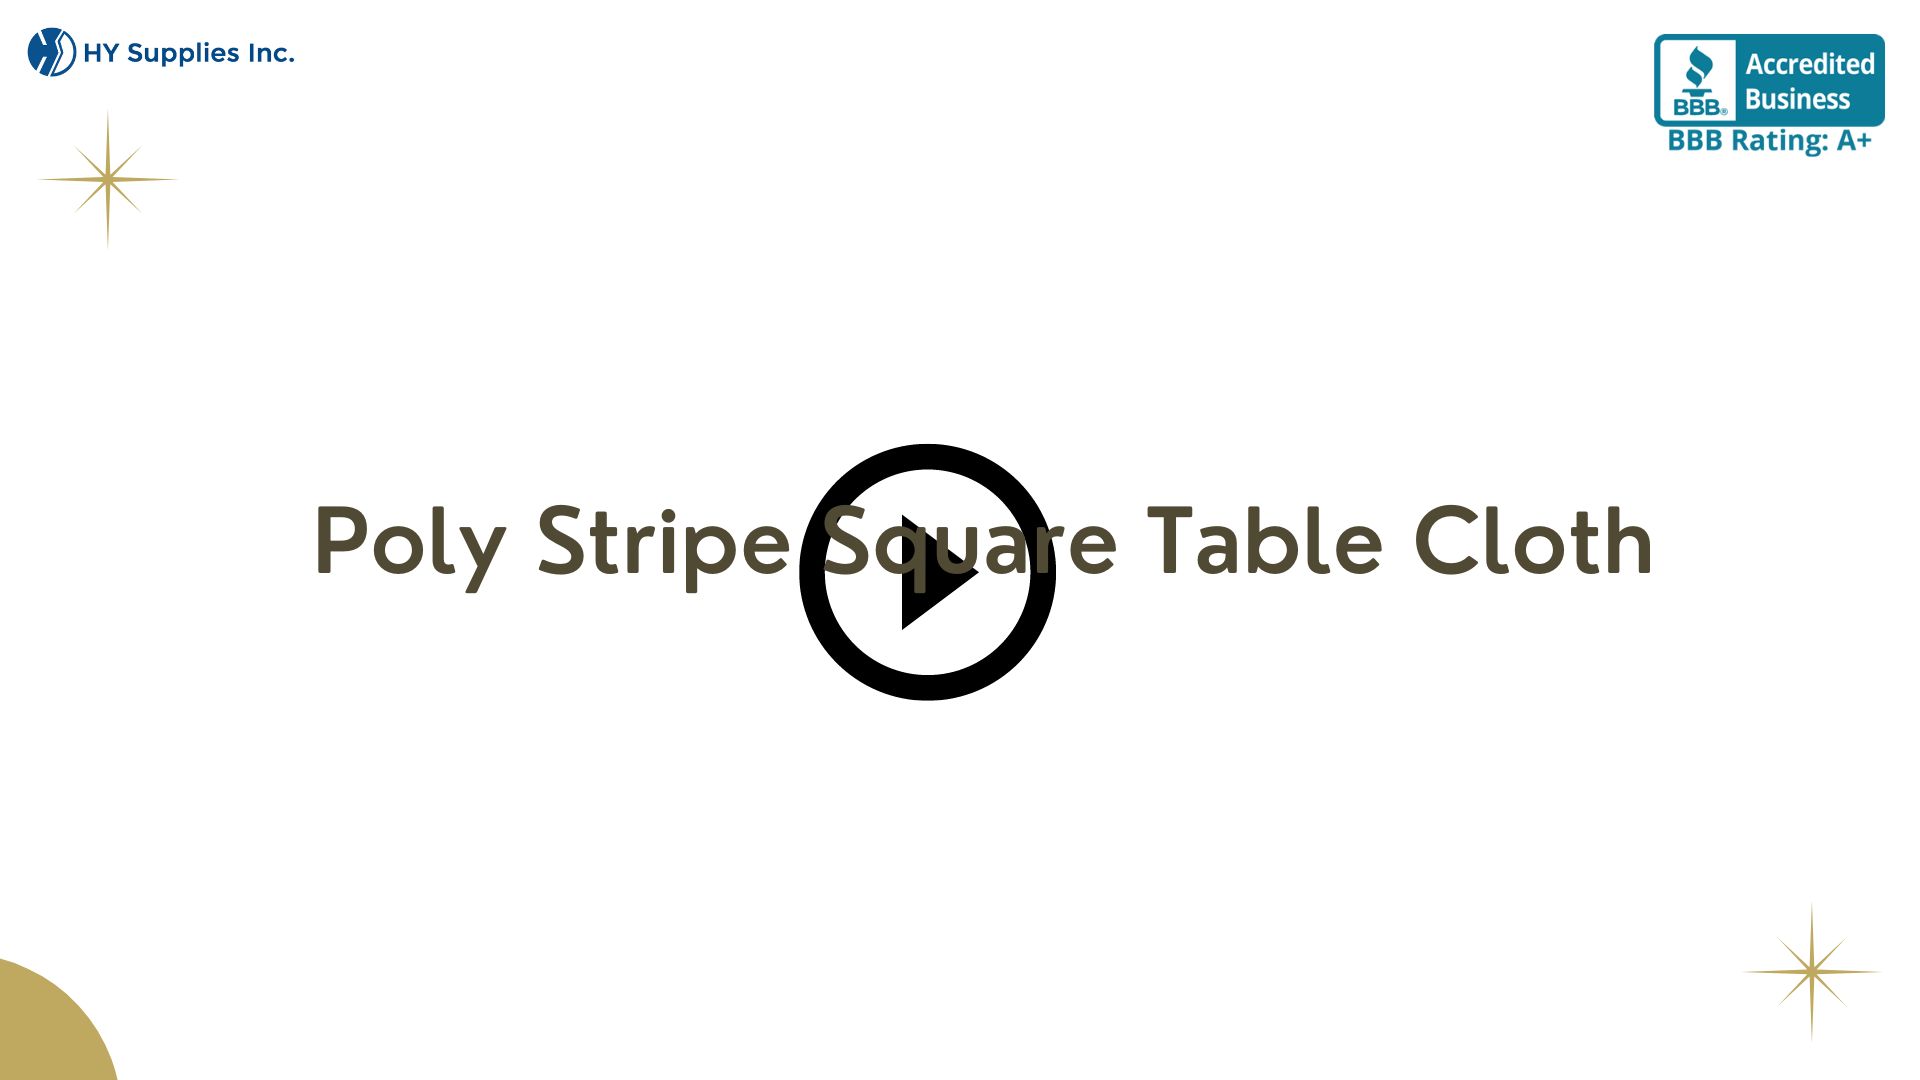 Poly Stripe Square Table Cloth